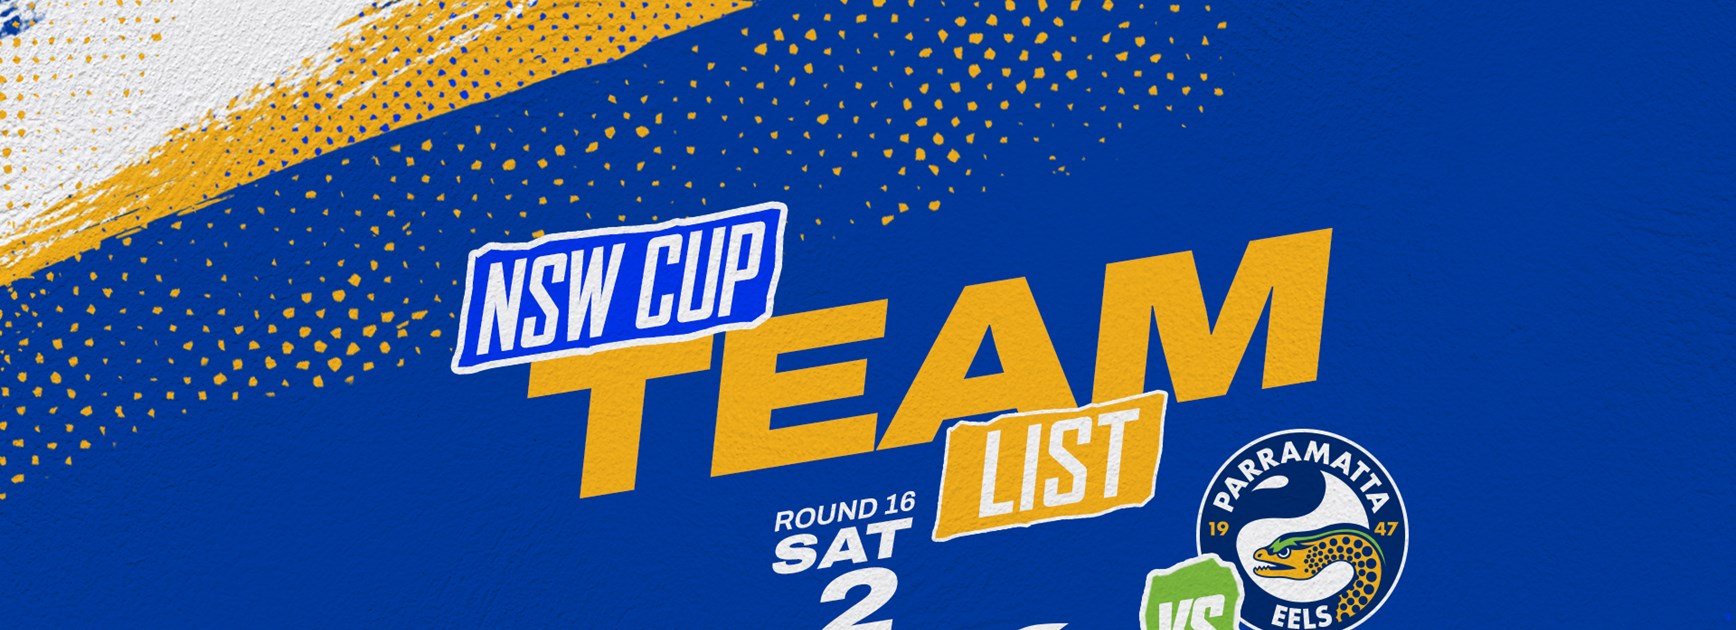 NSW Cup Team List - Rabbitohs v Eels, Round 16